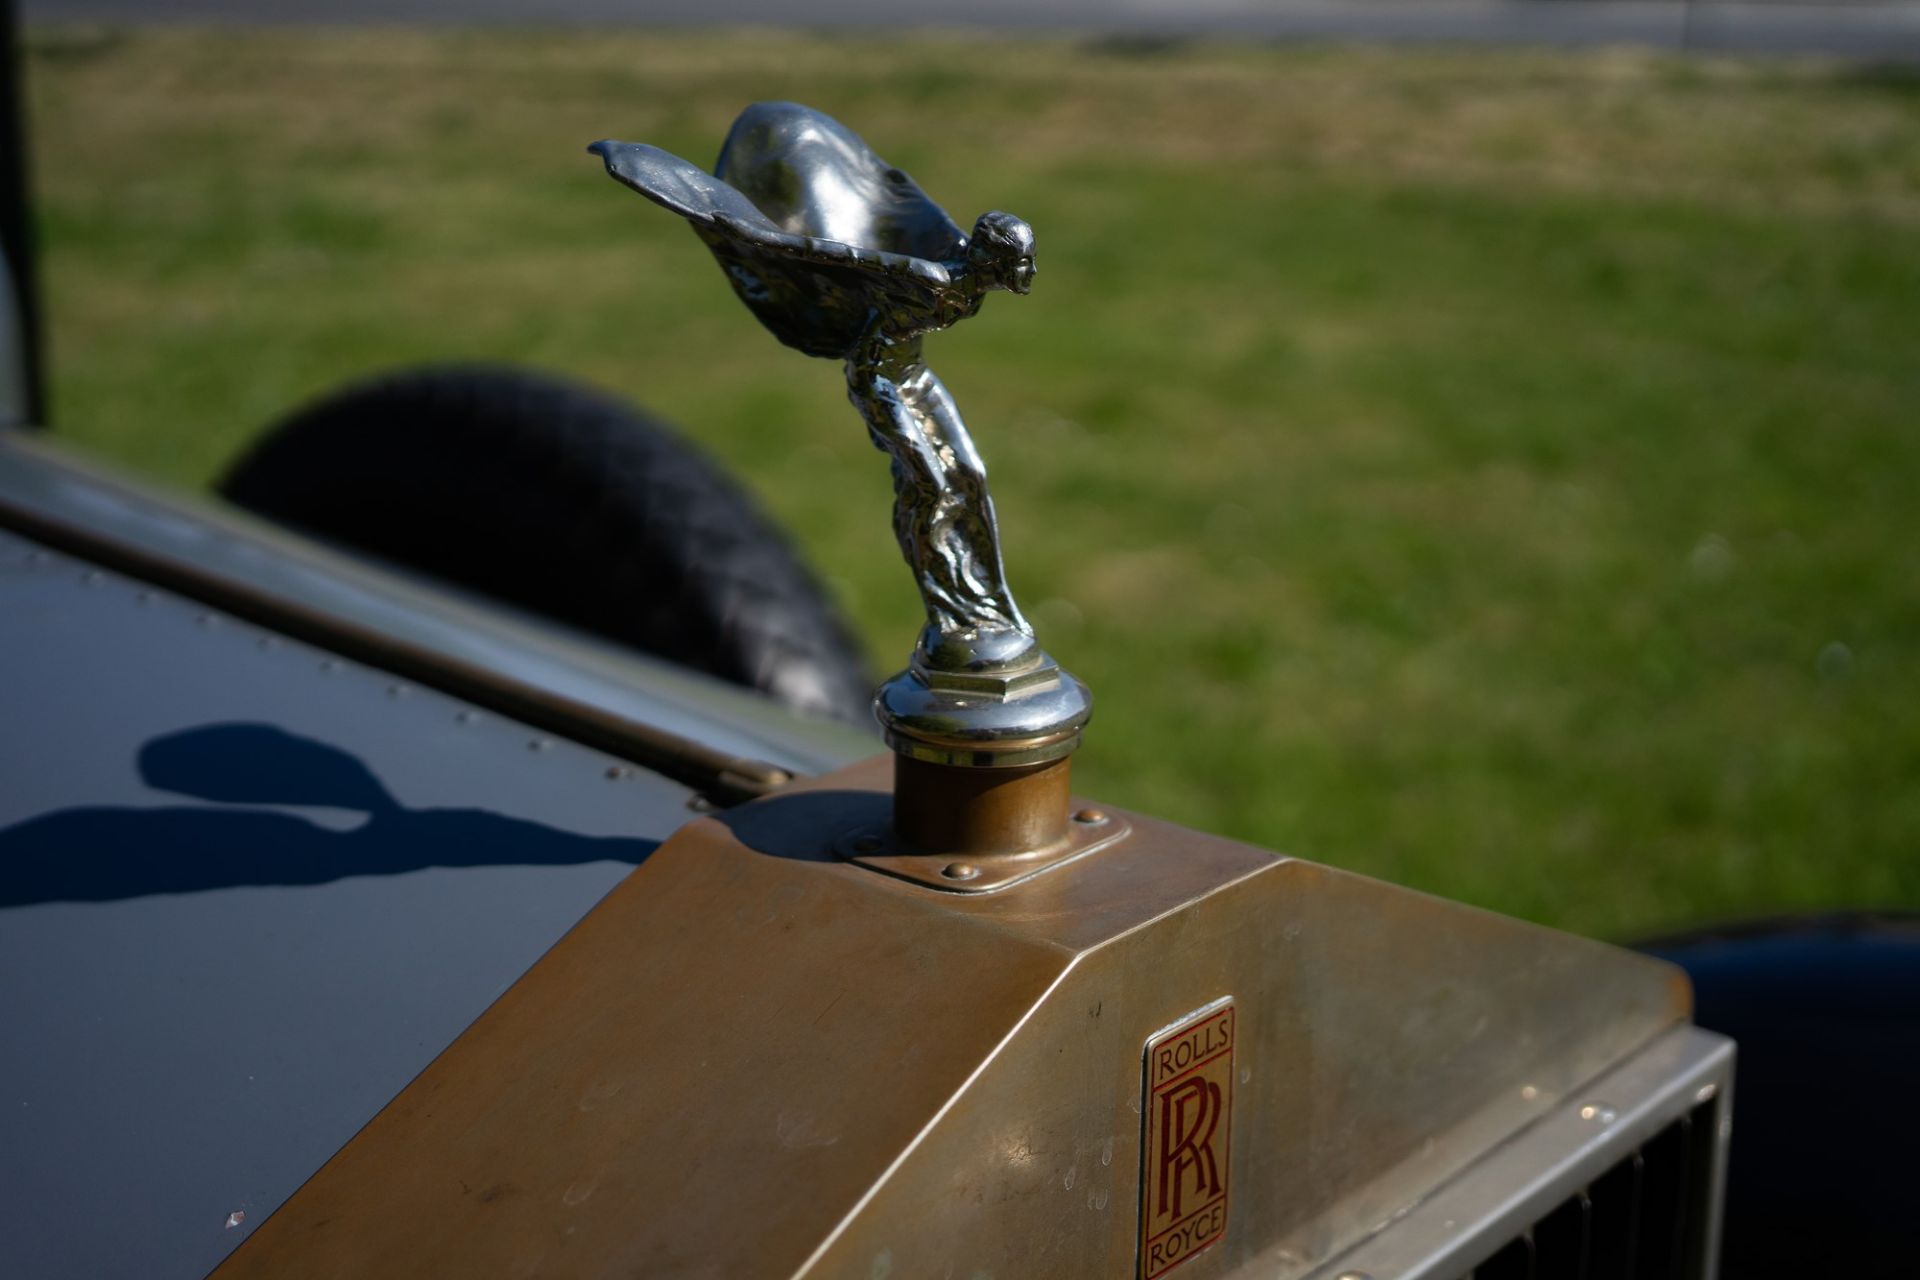 1926 Rolls Royce Phantom (Hooper & co.) - Image 12 of 16